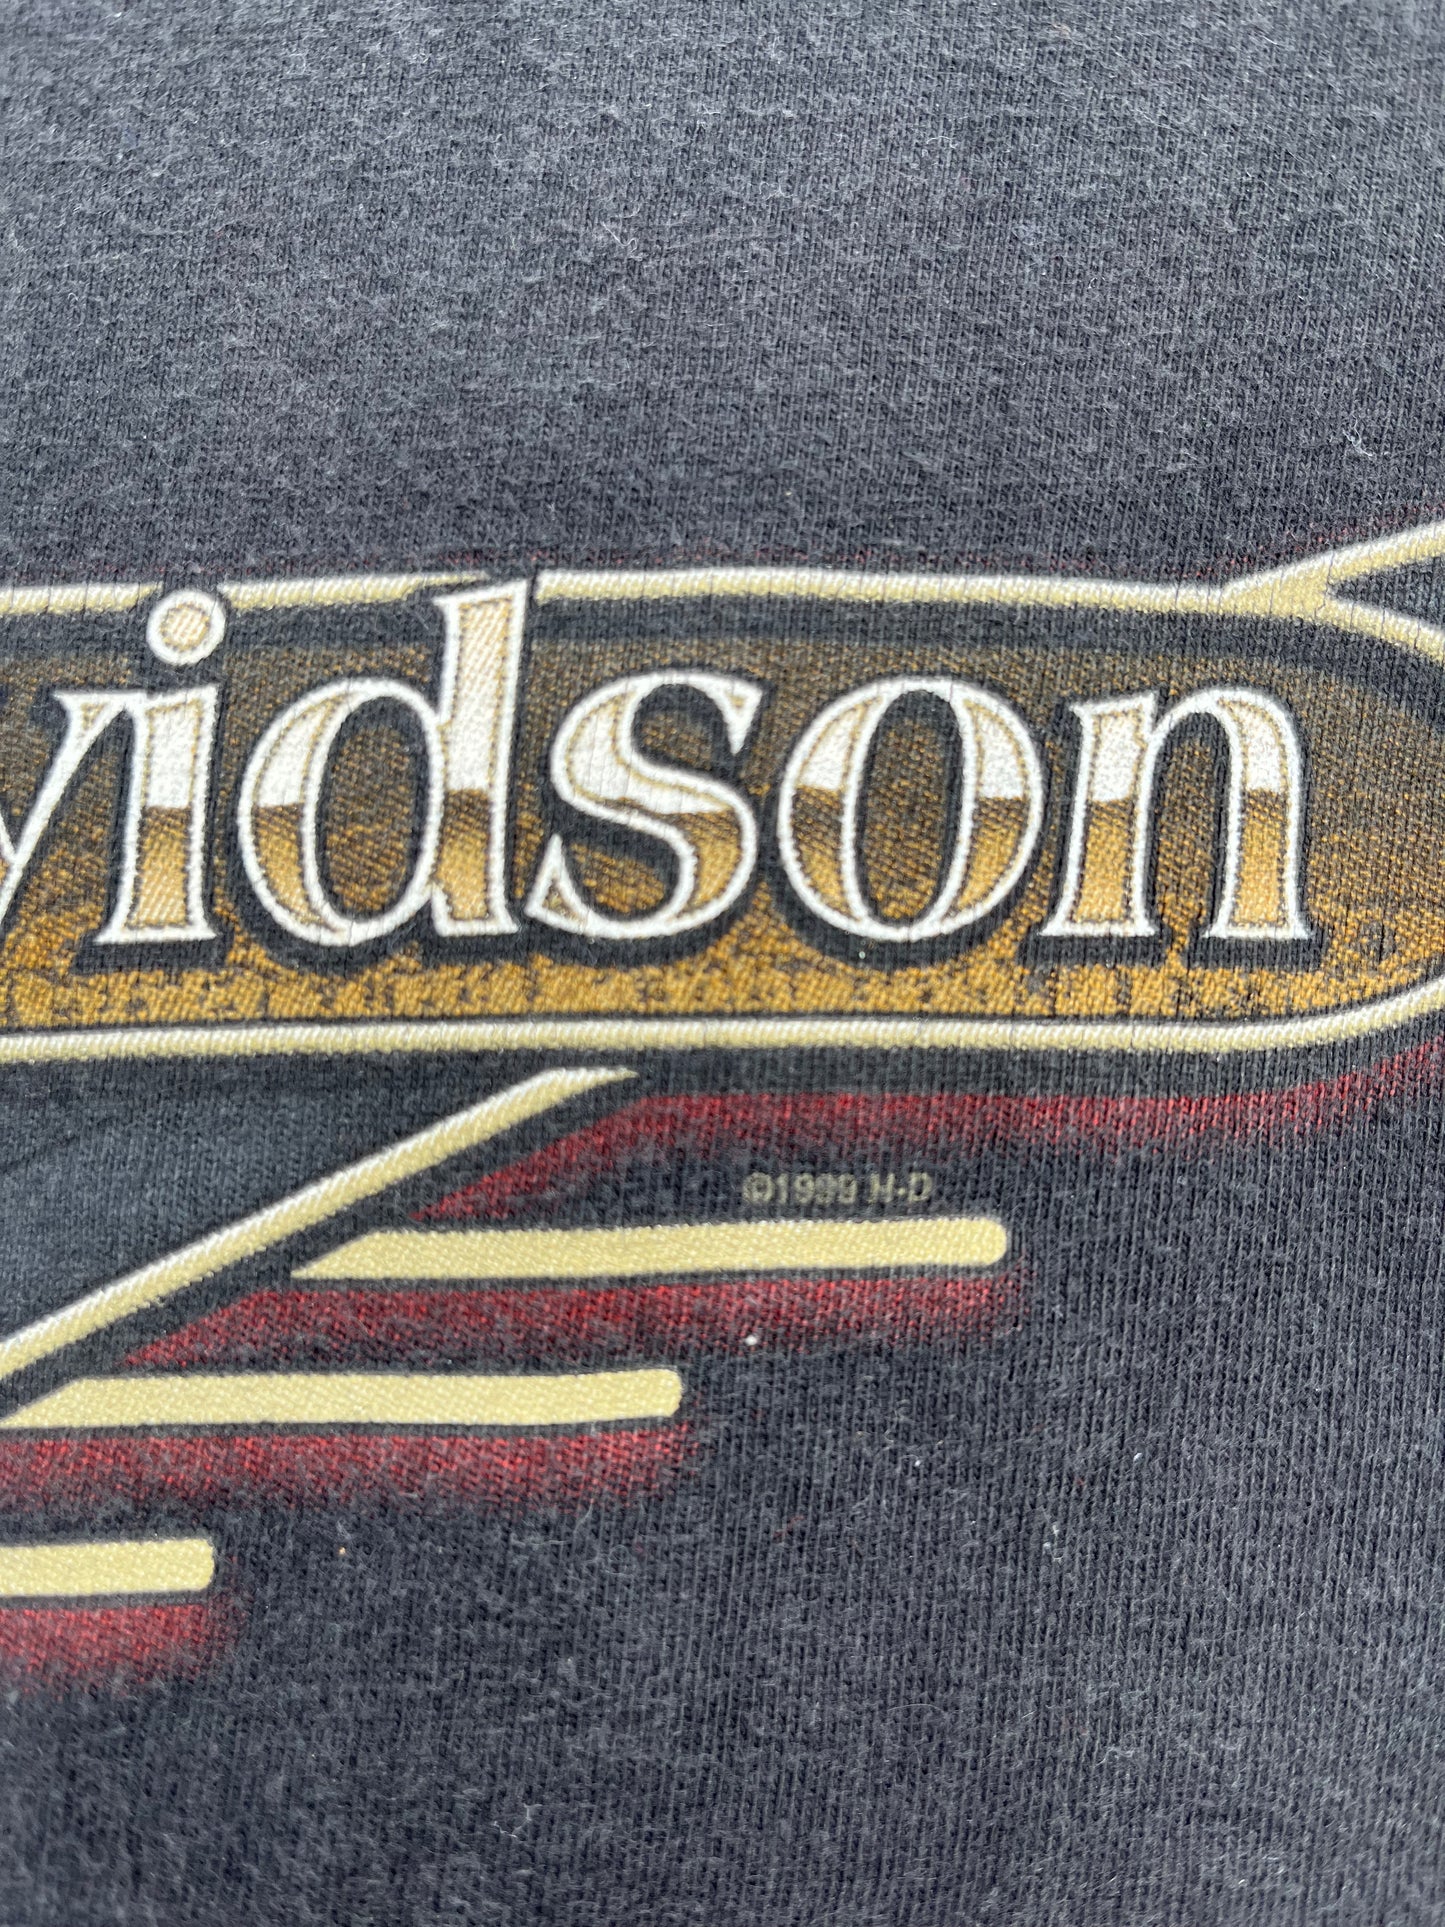 Vintage Harley Davidson Bloomington Indiana Retro 90's Biker T Shirt Size XL